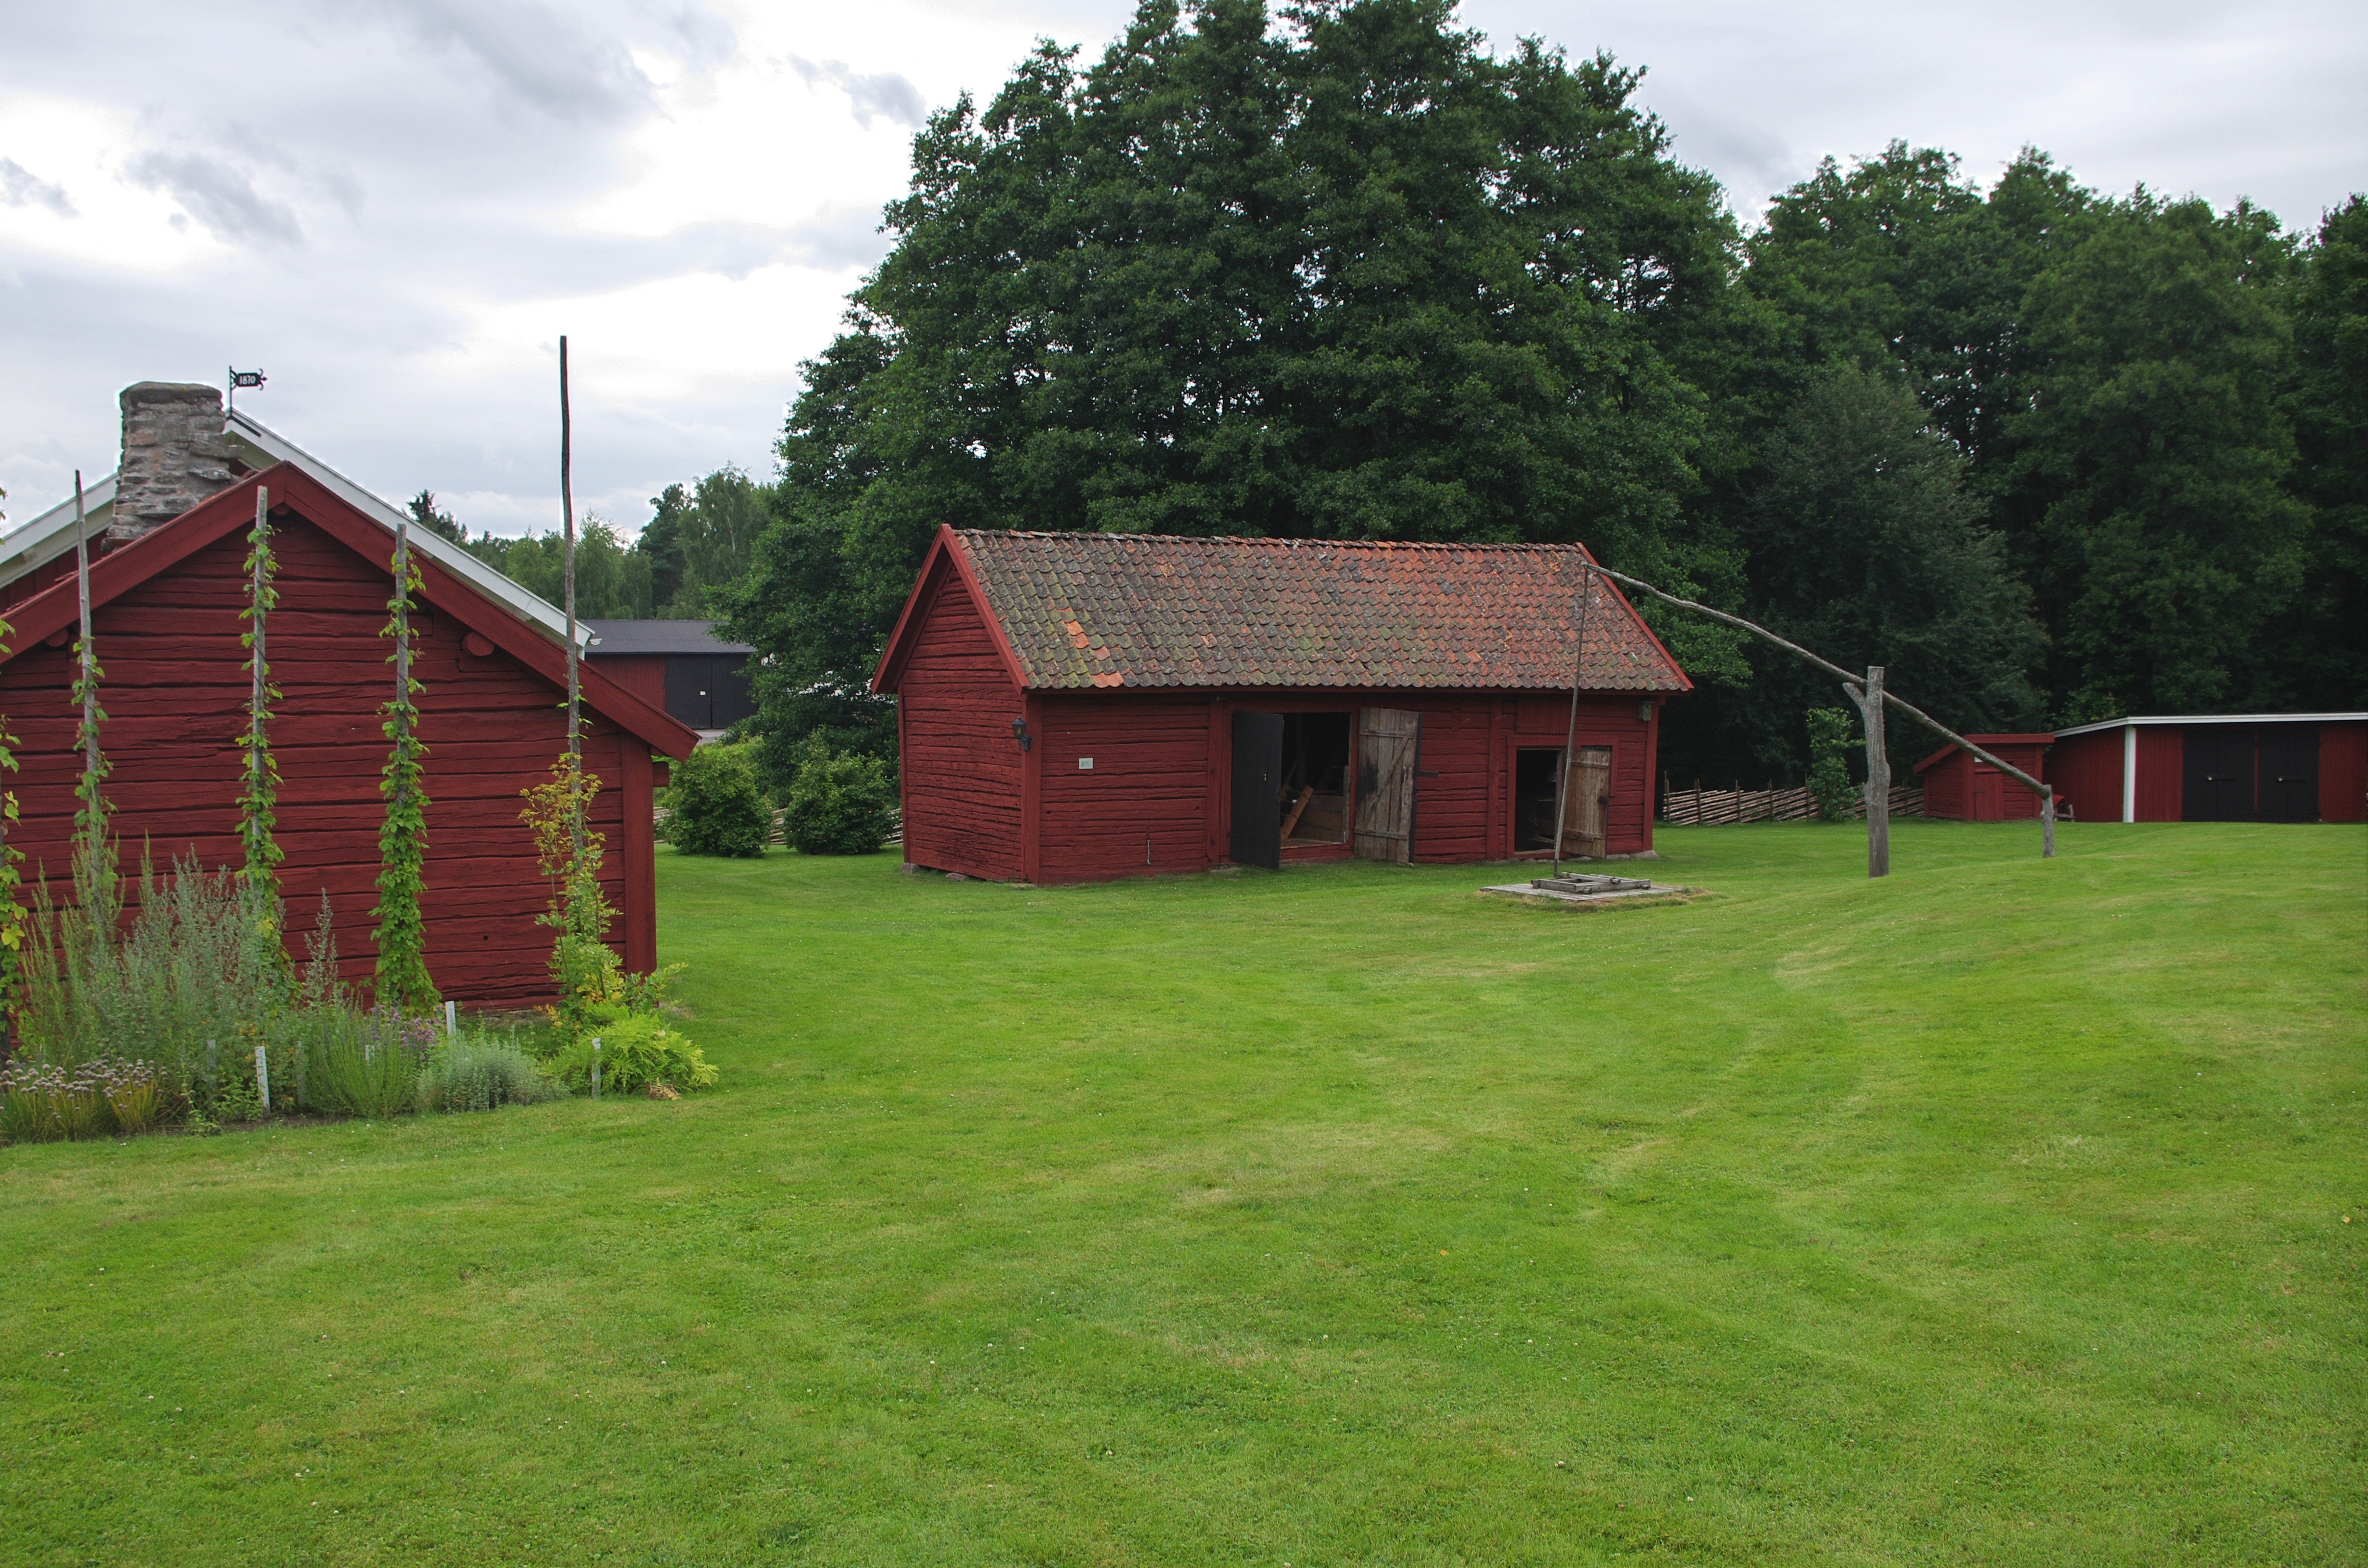 House, Farm, Rural, Rustic, Sweden, Barn, grass, house